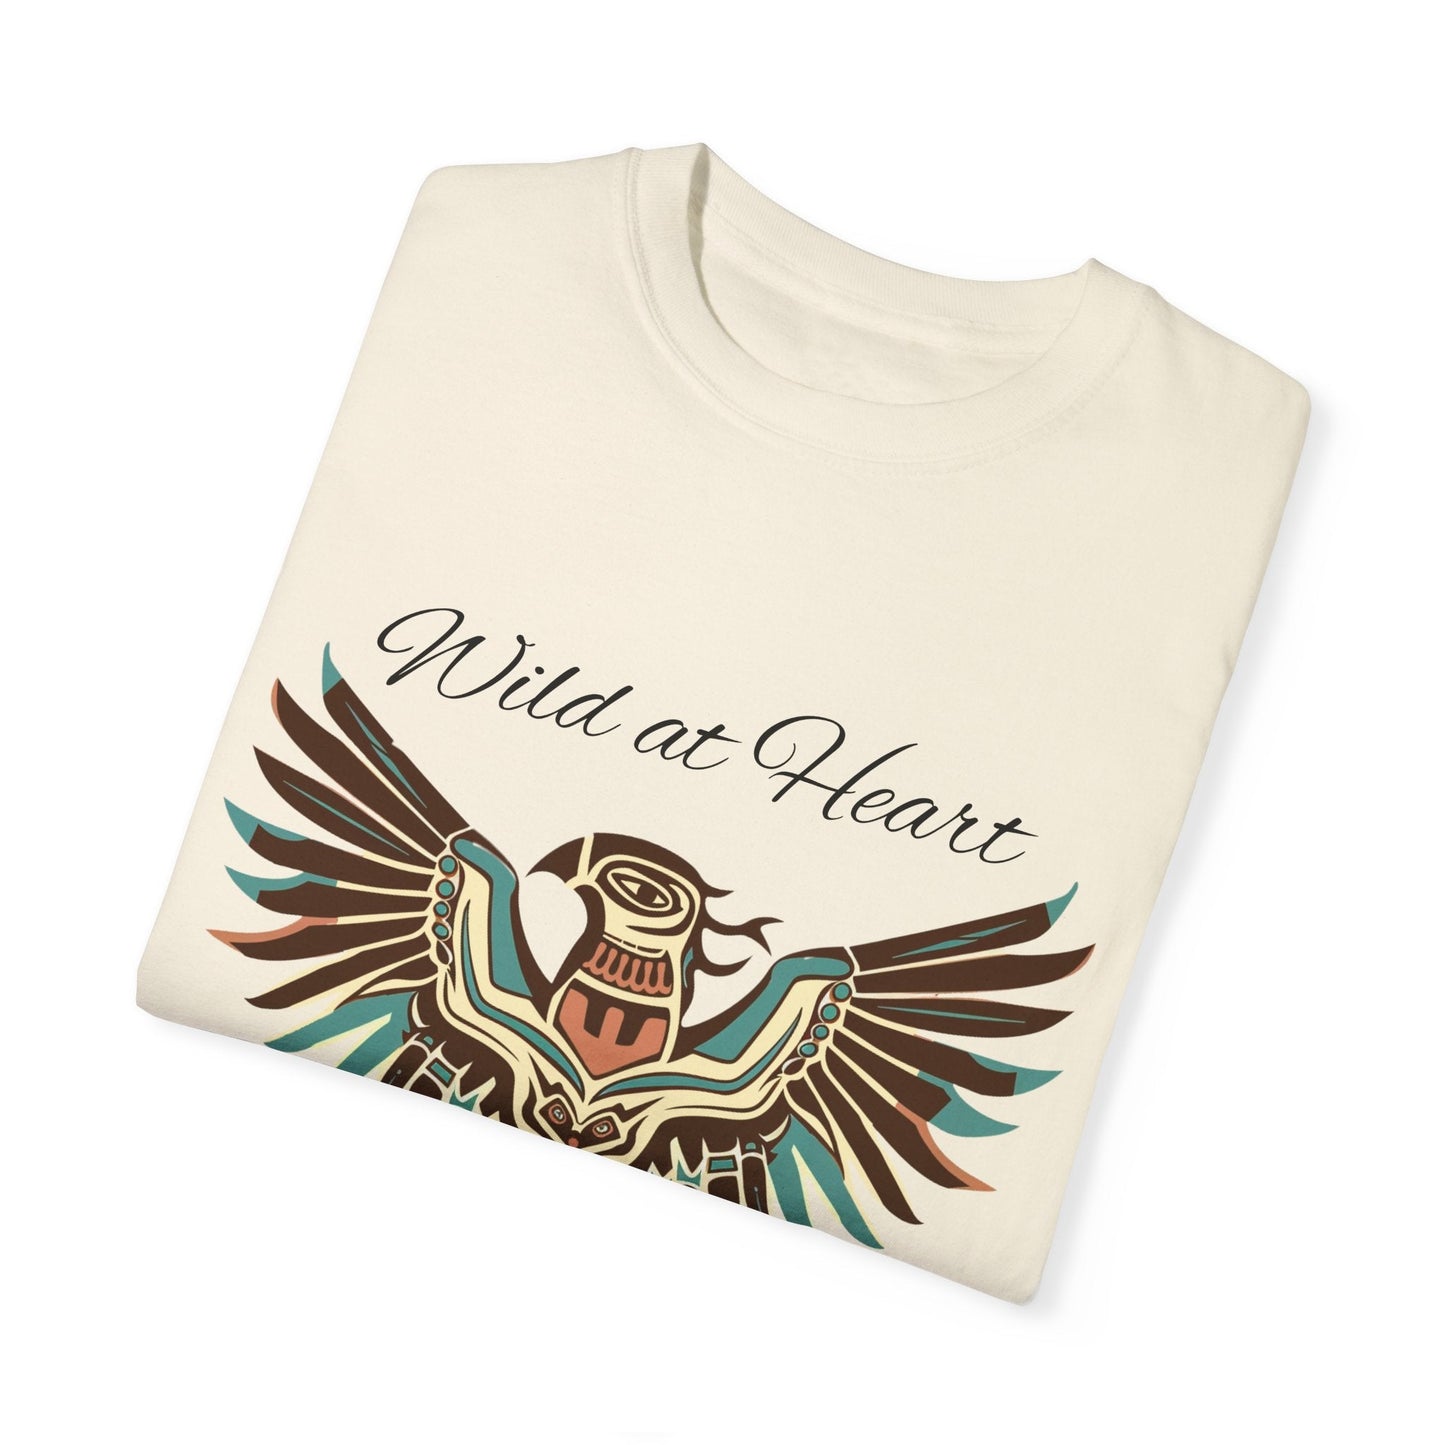 Native American Comfort Color T-Shirt, Thunderbird Art Tee Shirt, "Wild at Heart" - FlooredByArt